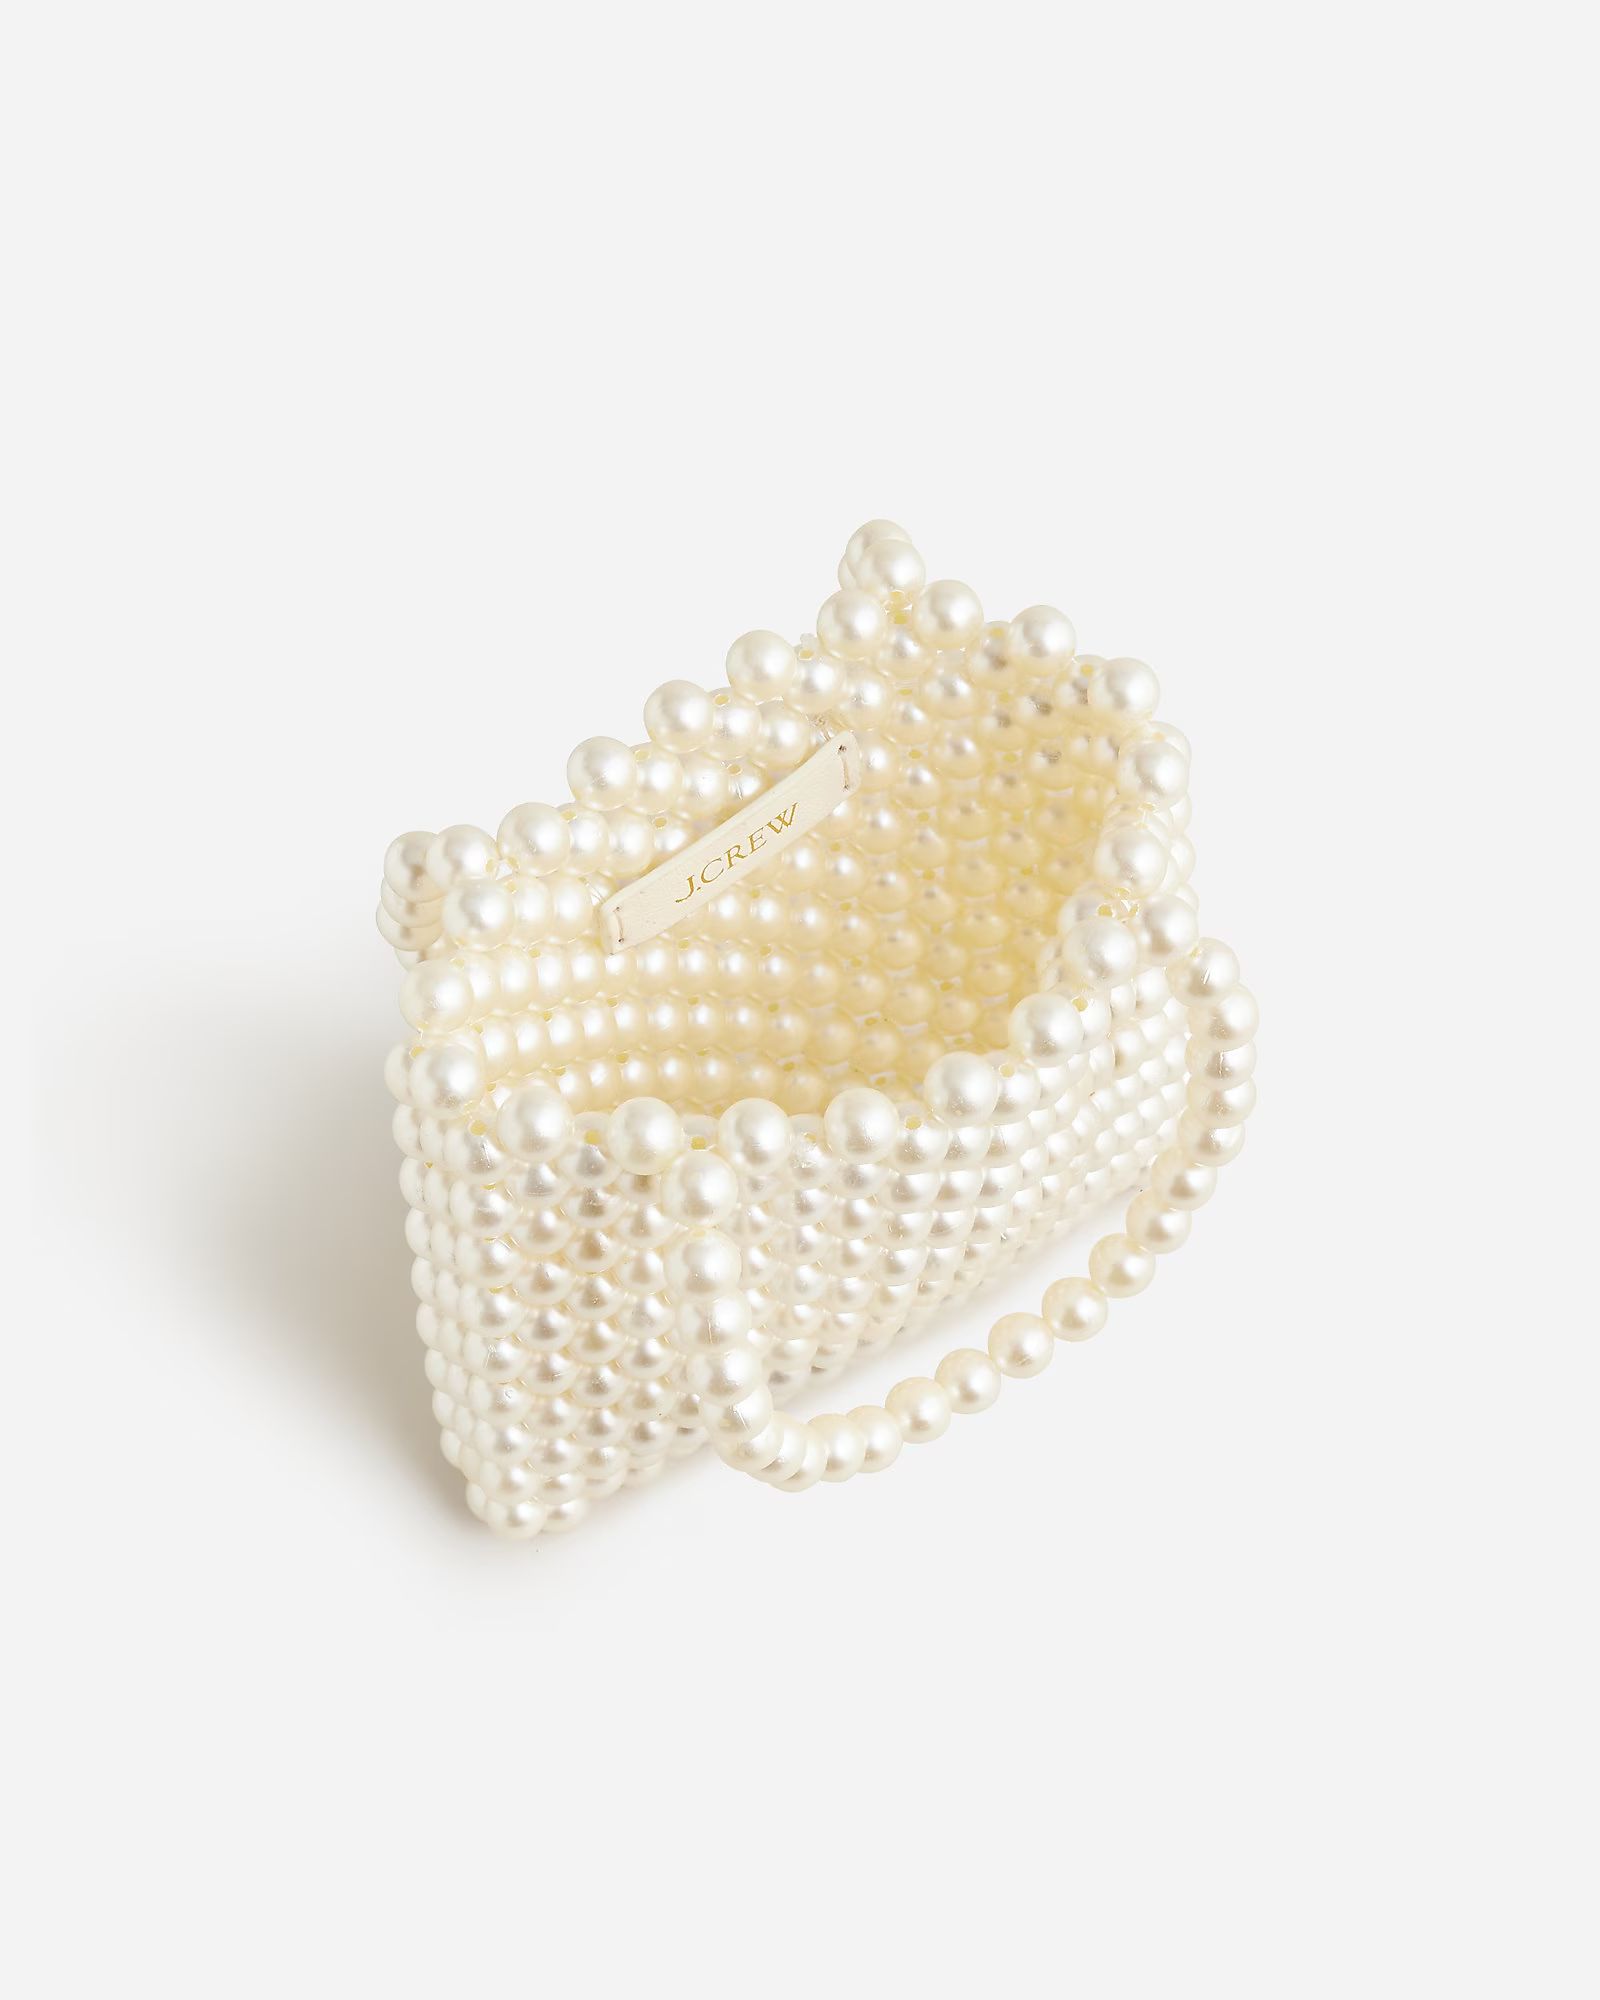 Hand-beaded faux-pearl mini bag | J.Crew US